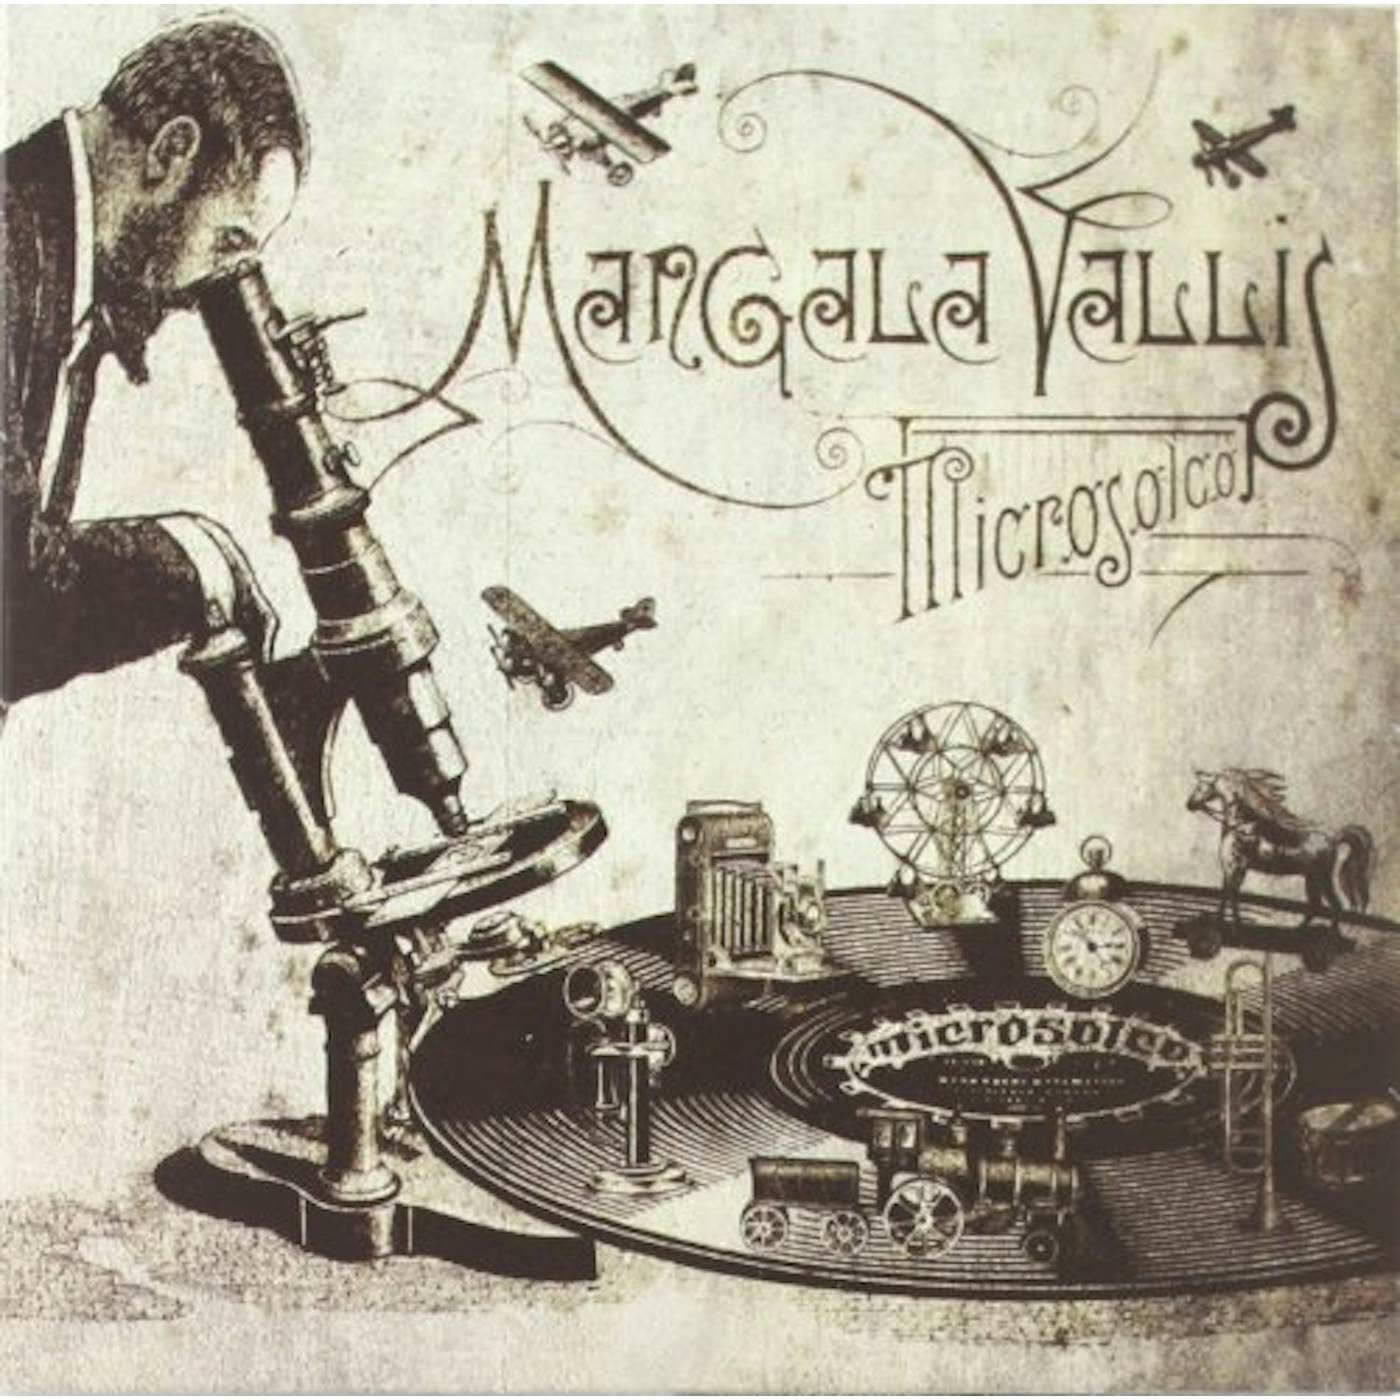 Mangala Vallis MICROSOLCO CD